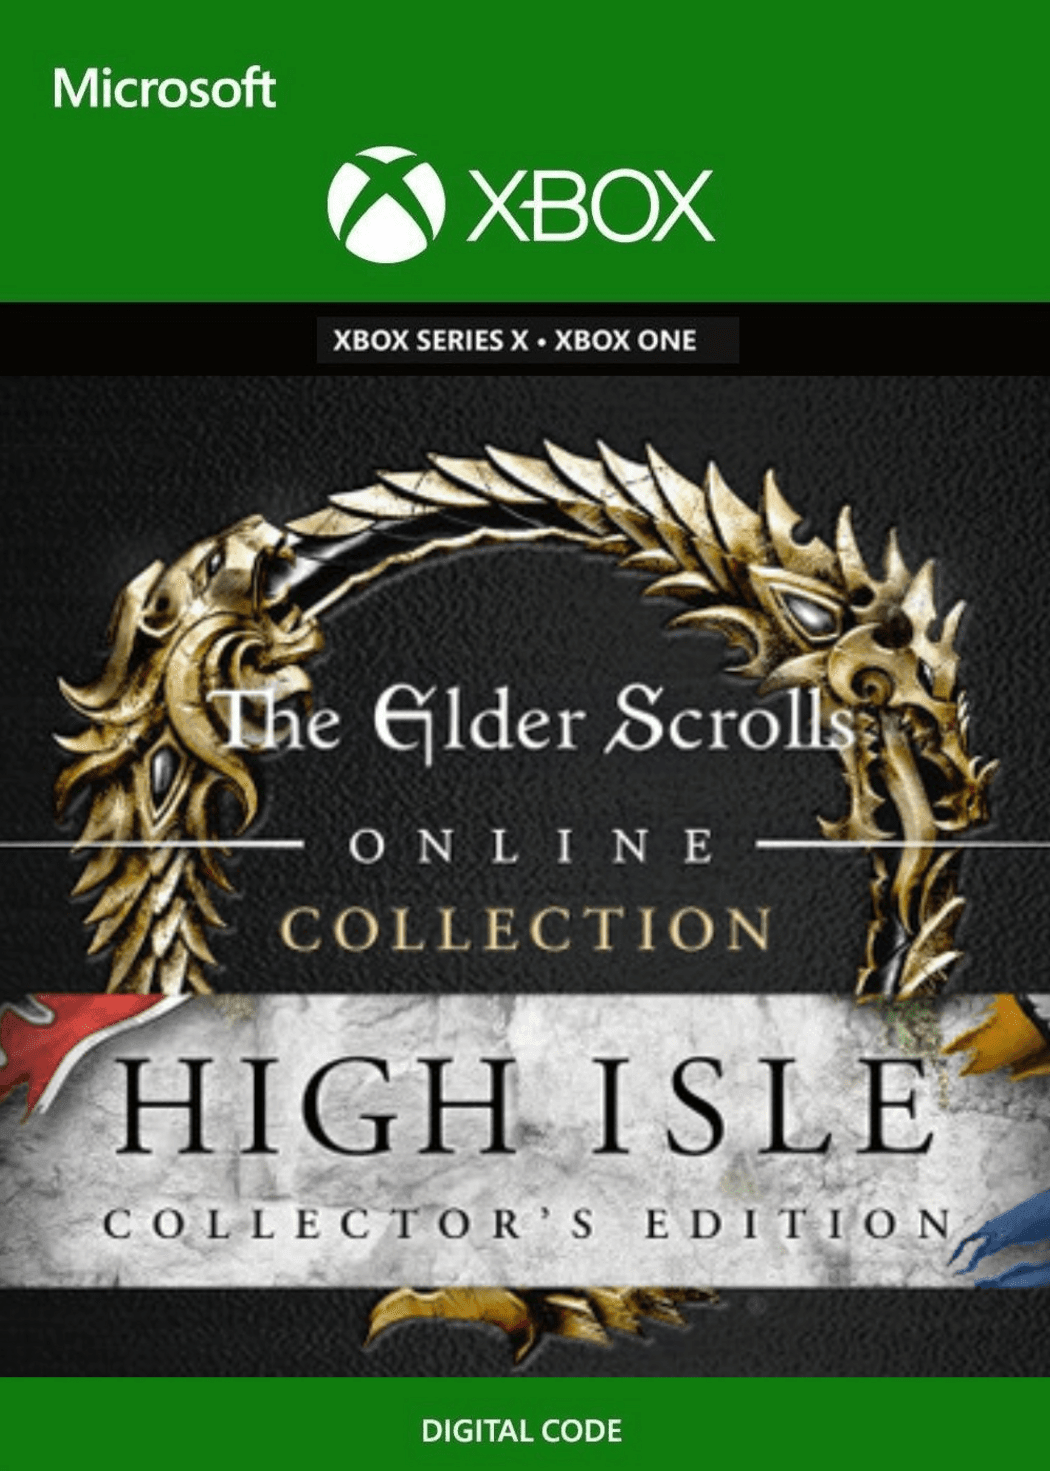 The Elder Scrolls Online Collection: High Isle (Collector's Edition) - Xbox - EXON - גיימינג ותוכנות - משחקים ותוכנות למחשב ולאקס בוקס!